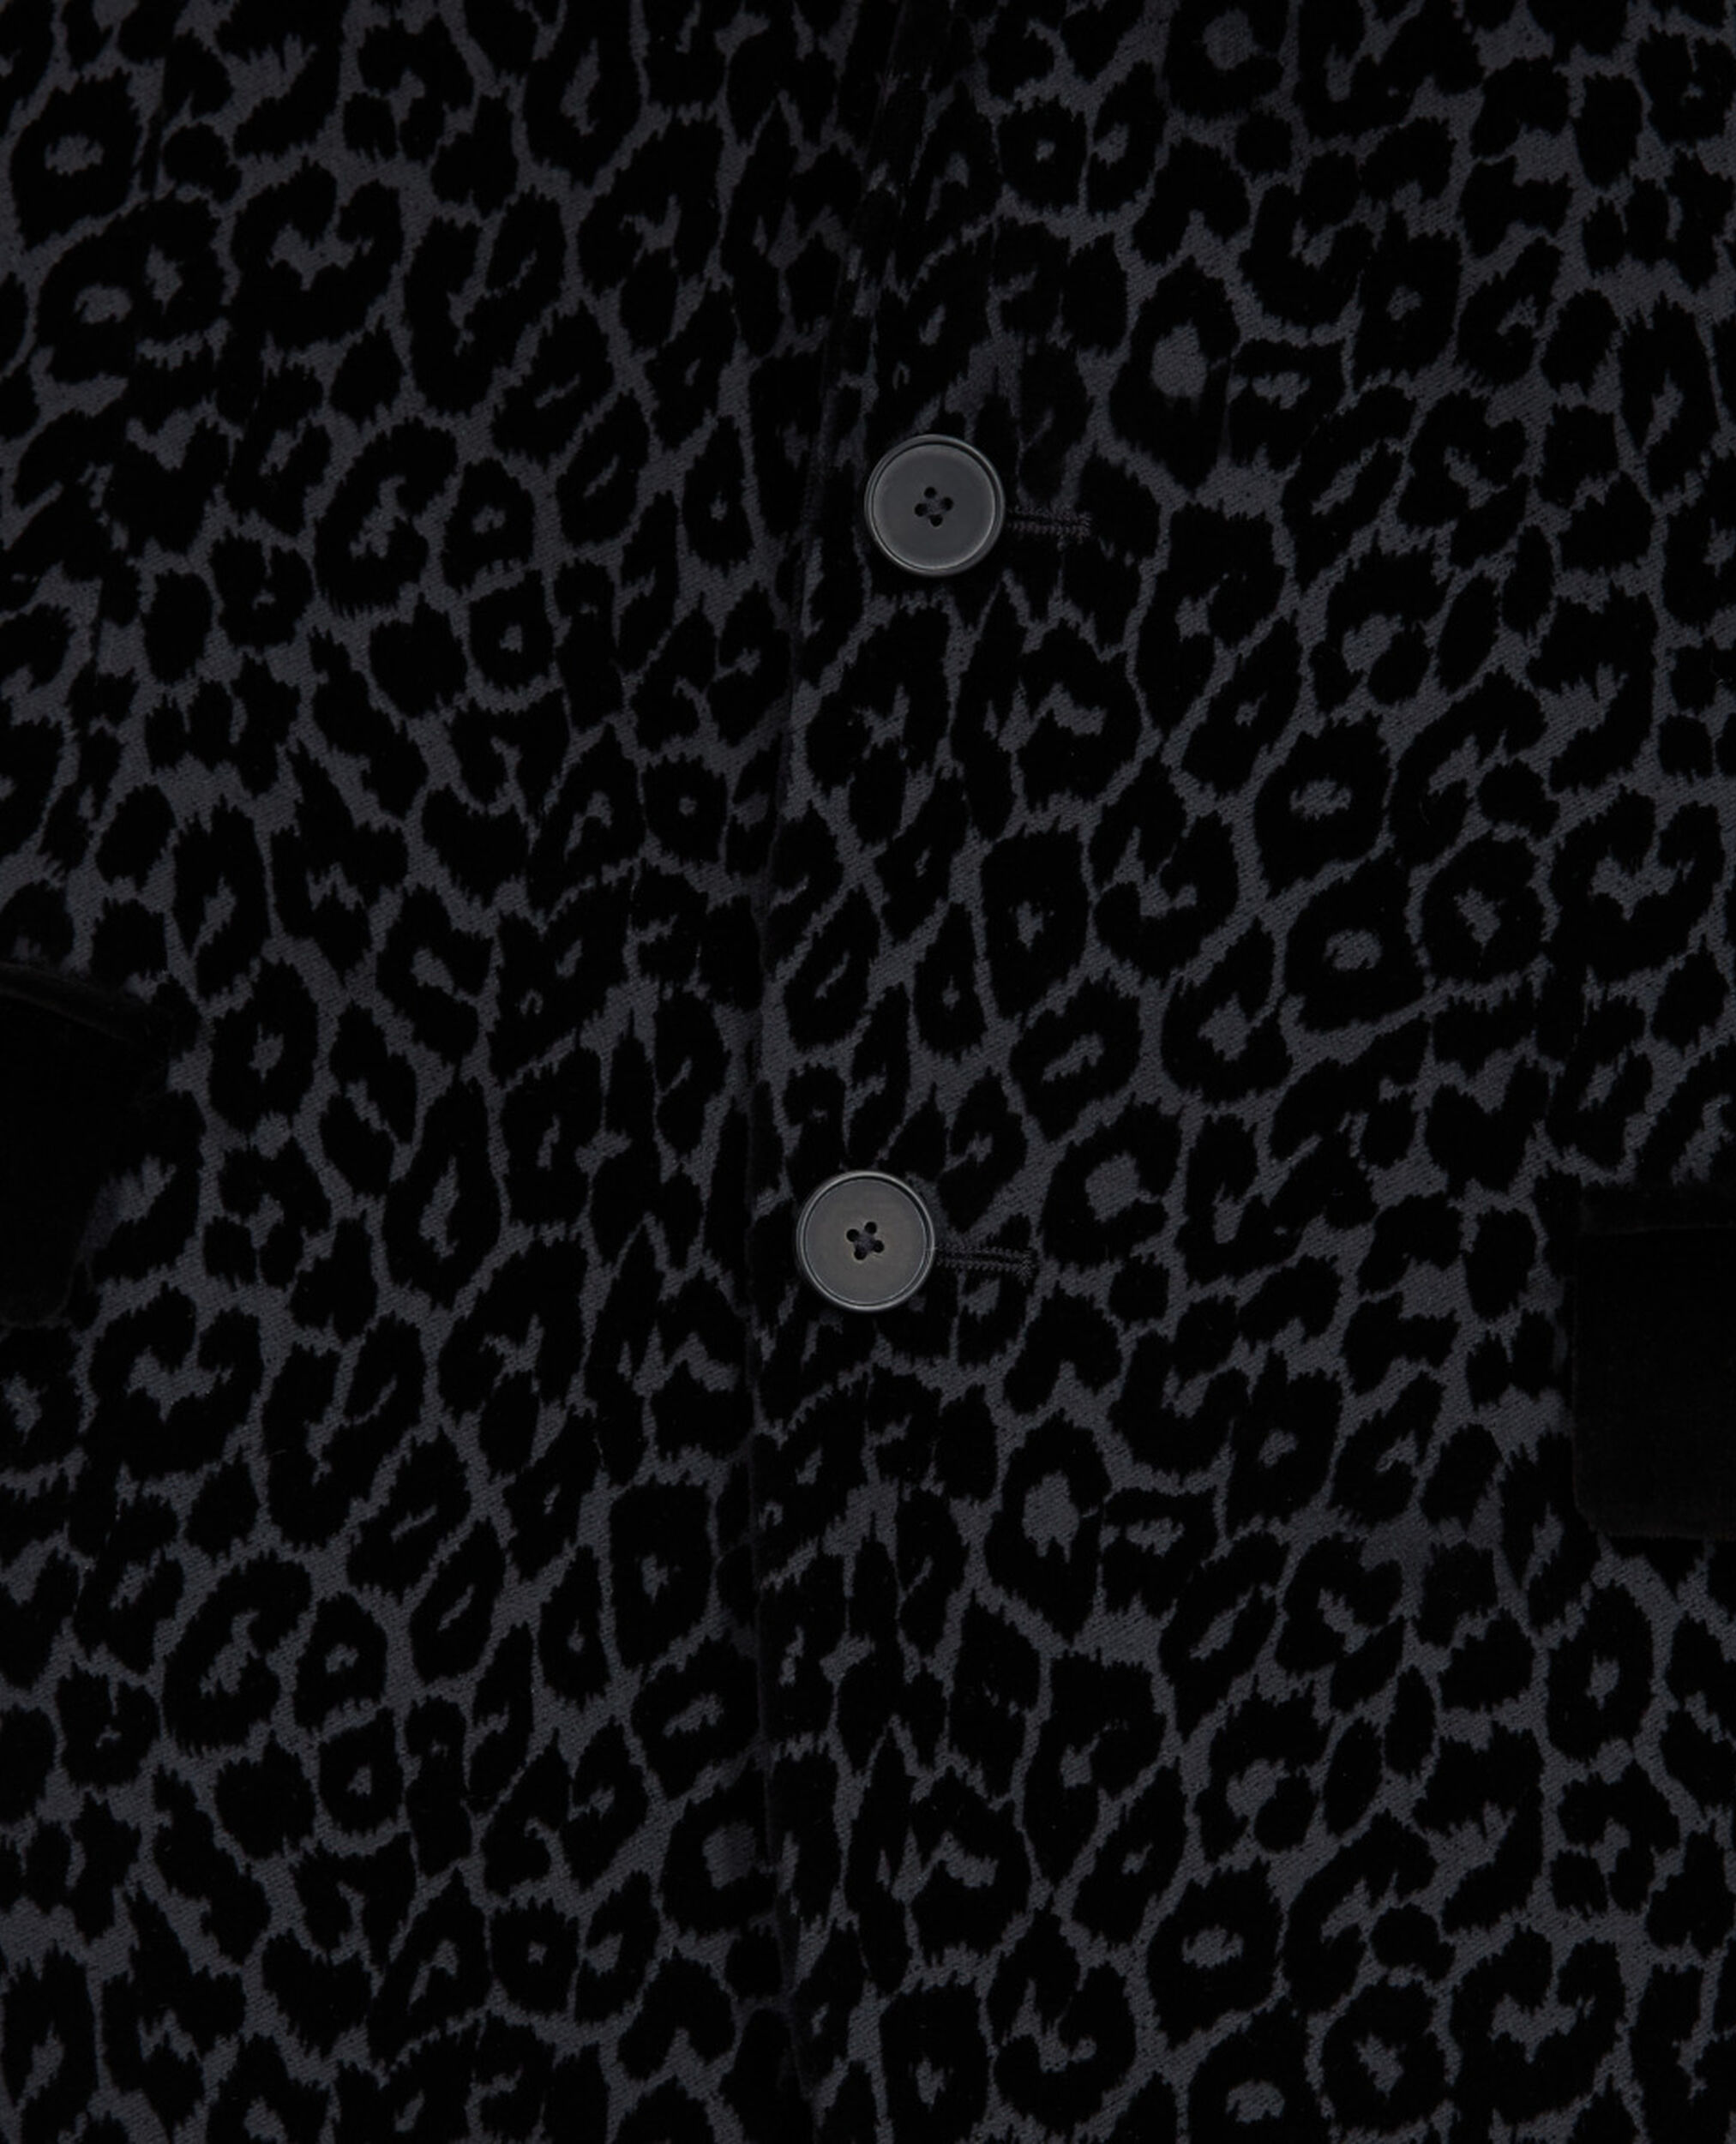 Chaqueta traje leopardo negra, BLACK, hi-res image number null